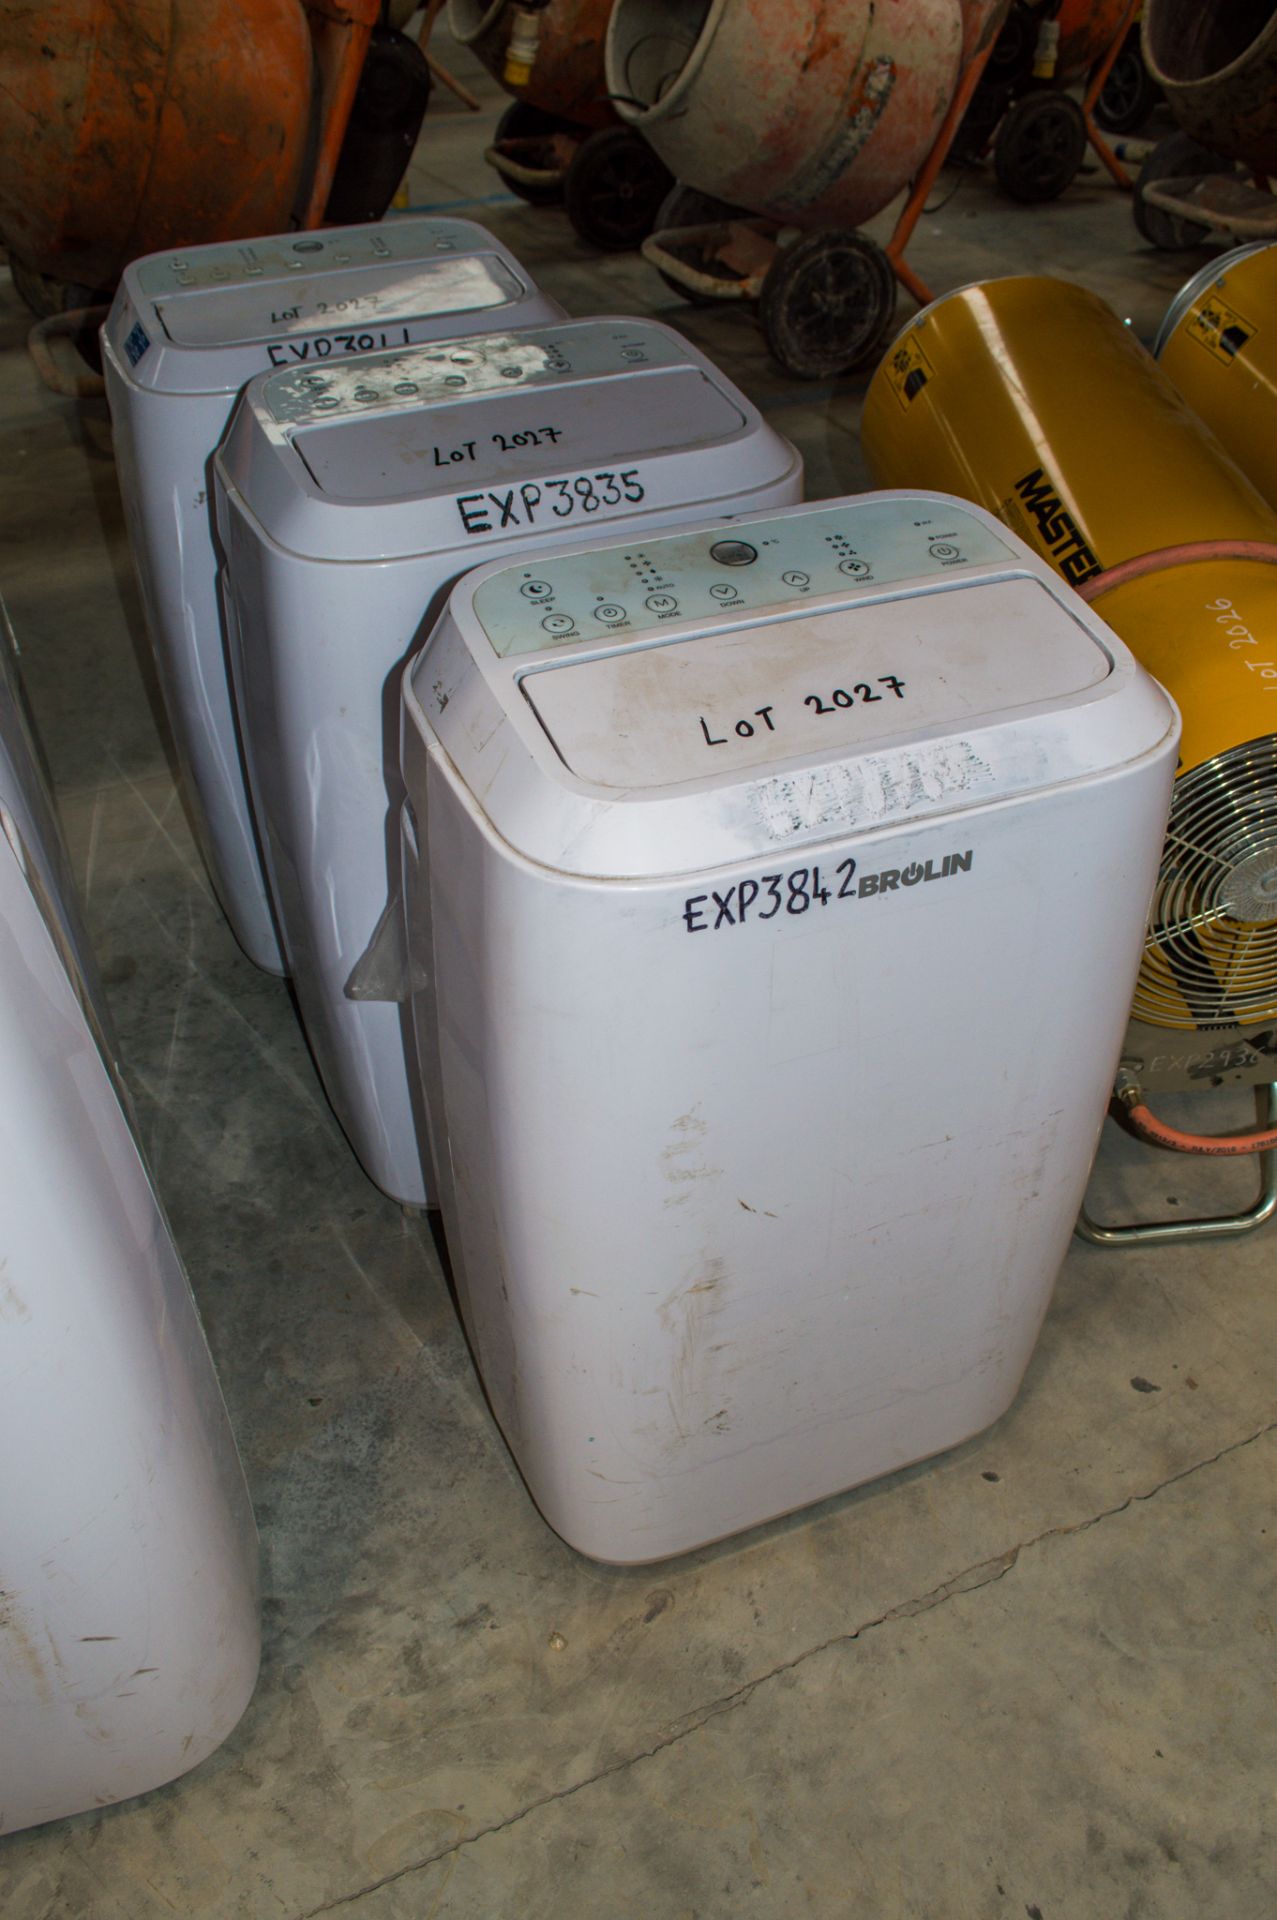 3 - Brolin 240v air conditioning units EXP3842, EXP3835, EXP3844